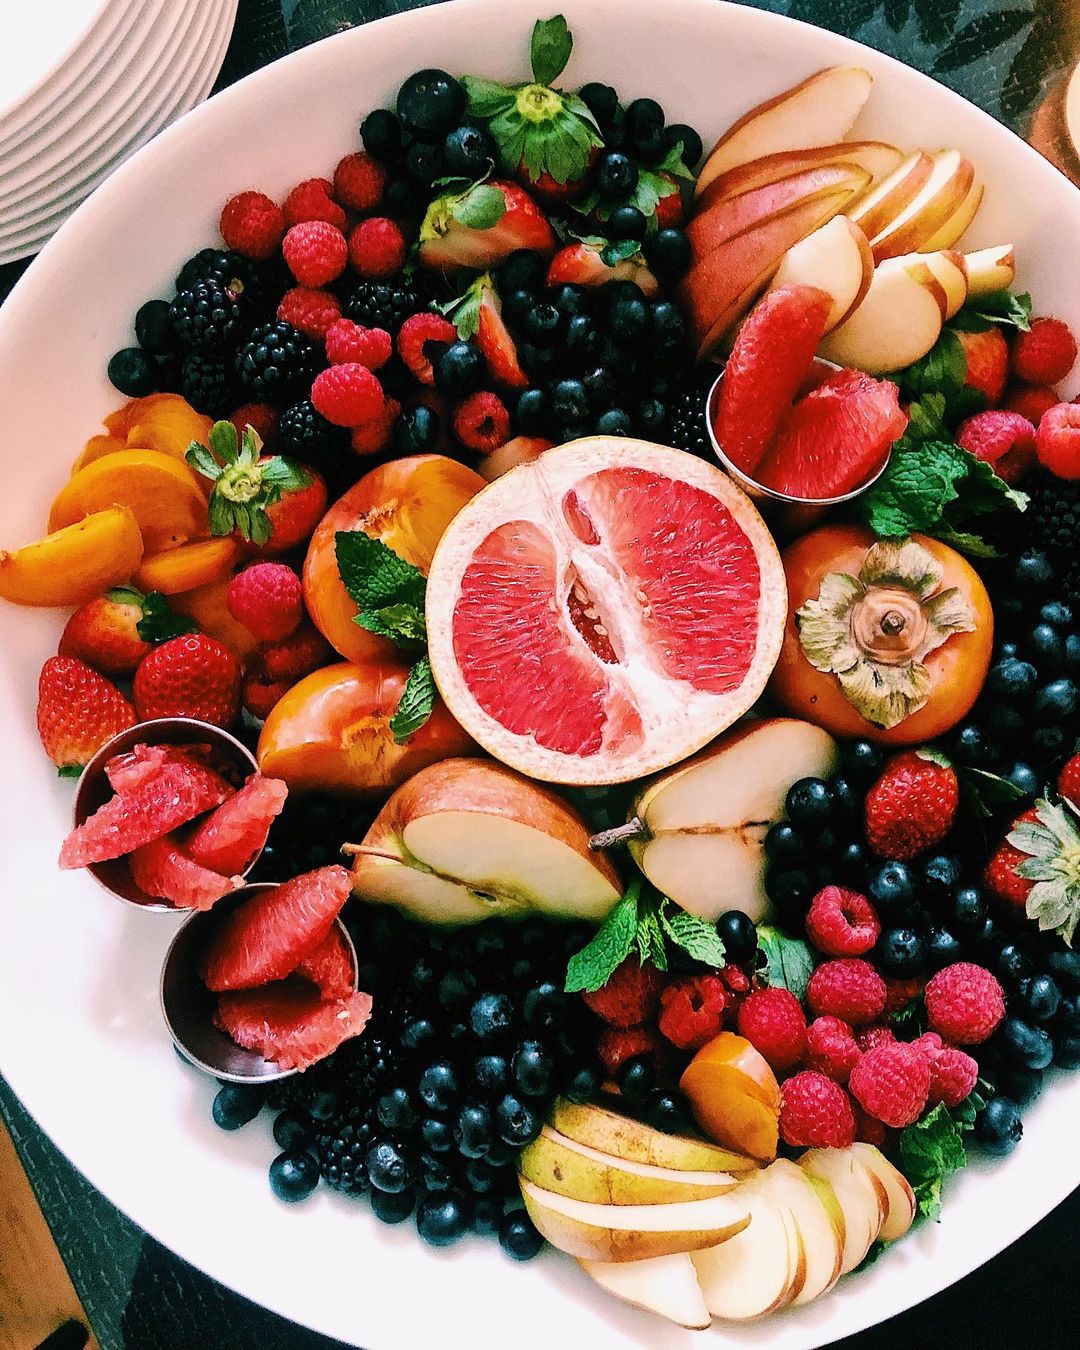 Pictured: fruit salad